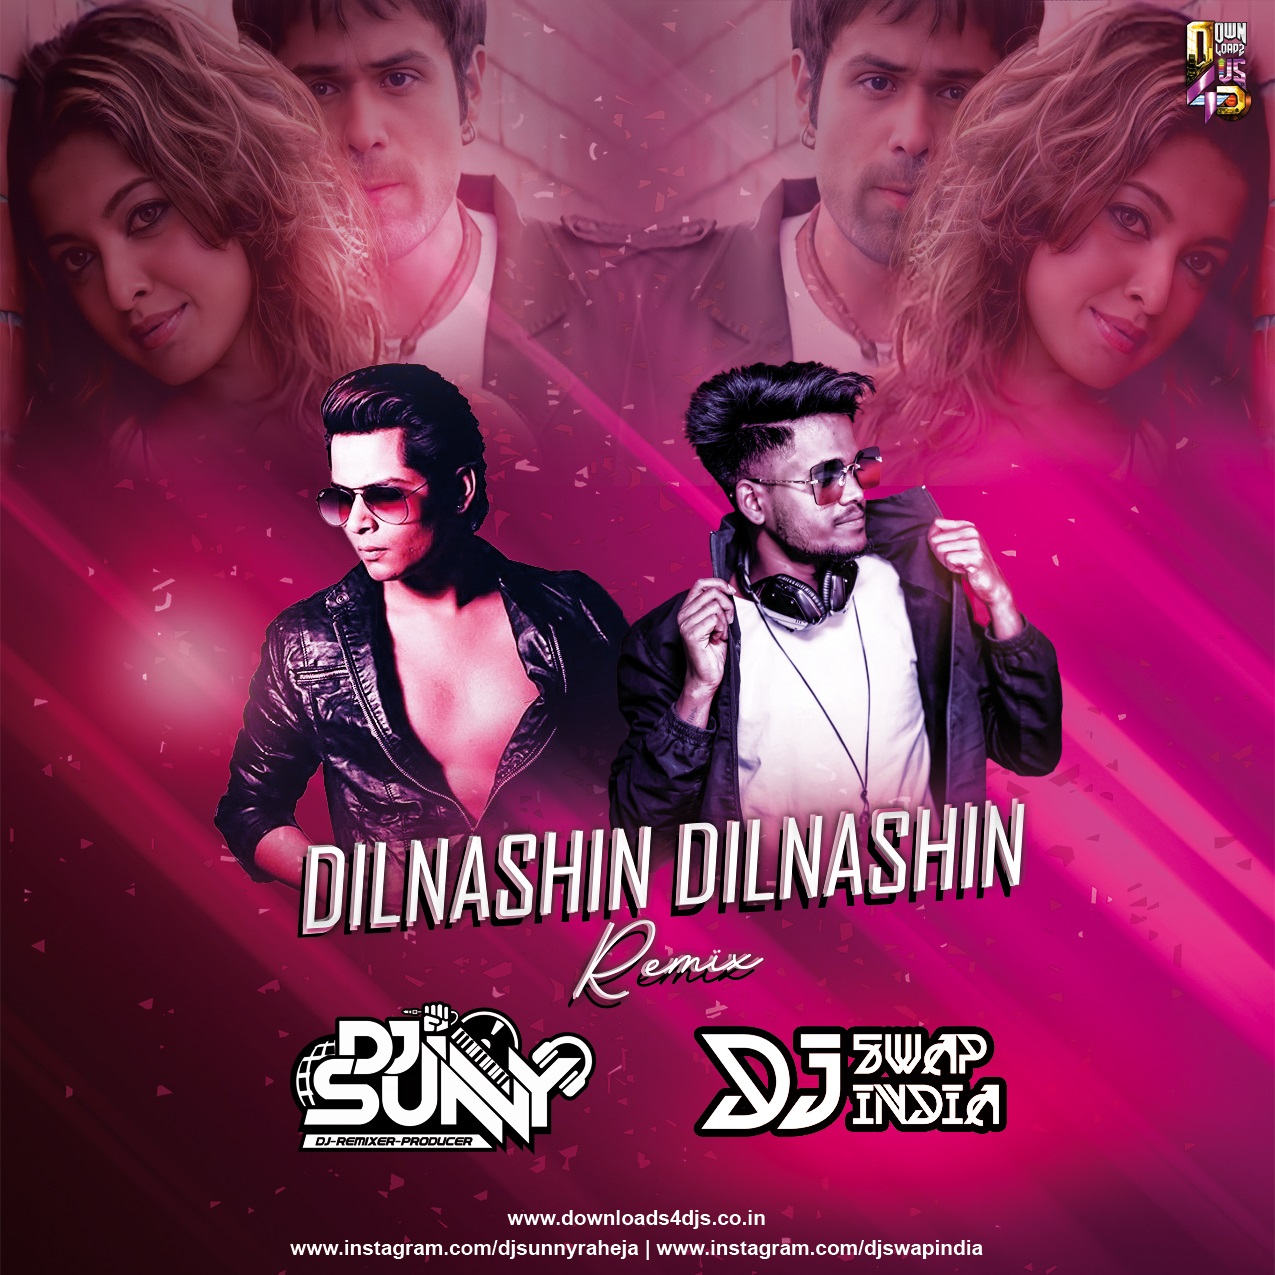 DilNashin DilNashin (Remix) - DJ Sunny & DJ Swap India - Downloads4Djs